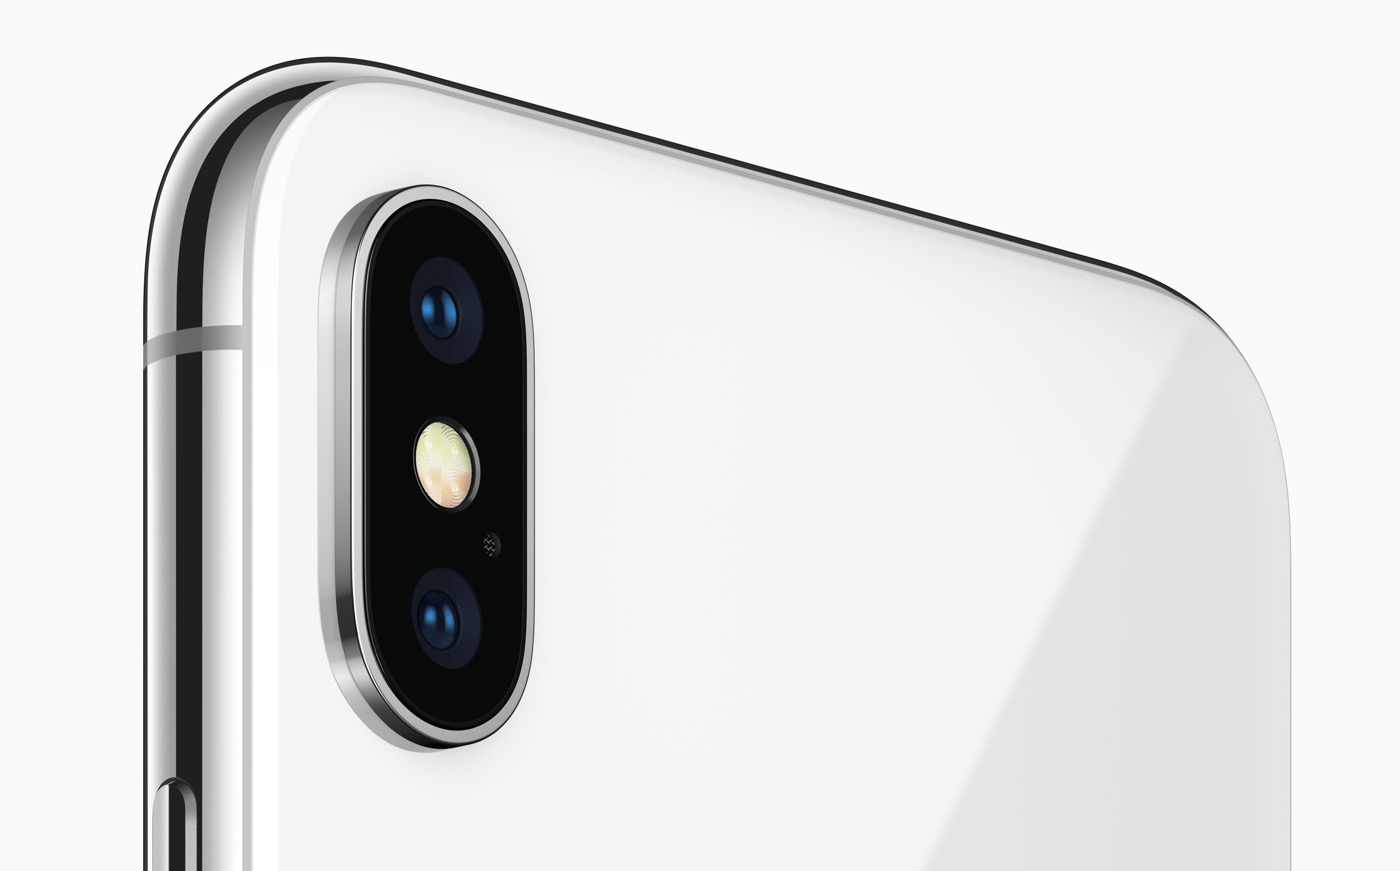 ｢iPhone X｣と｢iPhone 8/8 Plus｣は低温時にカメラのLEDフラッシュが使えない場合がある模様